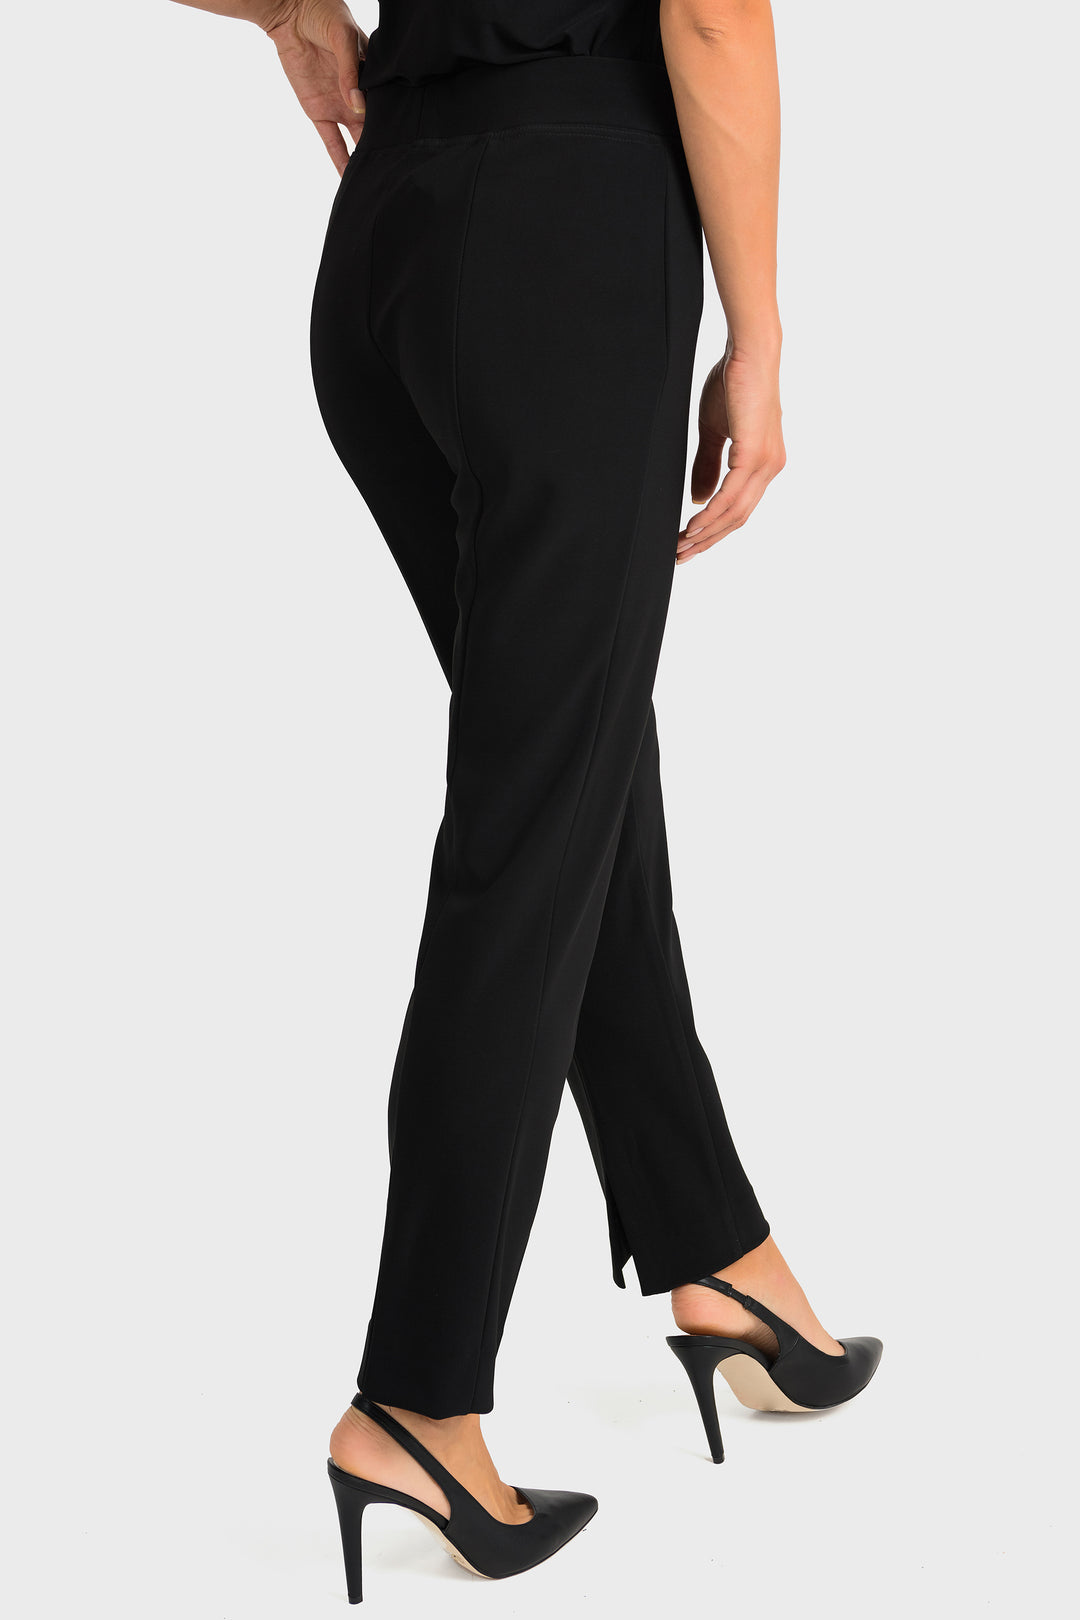 Joseph Ribkoff women's business casual slim fit basic pull-on pant - black back